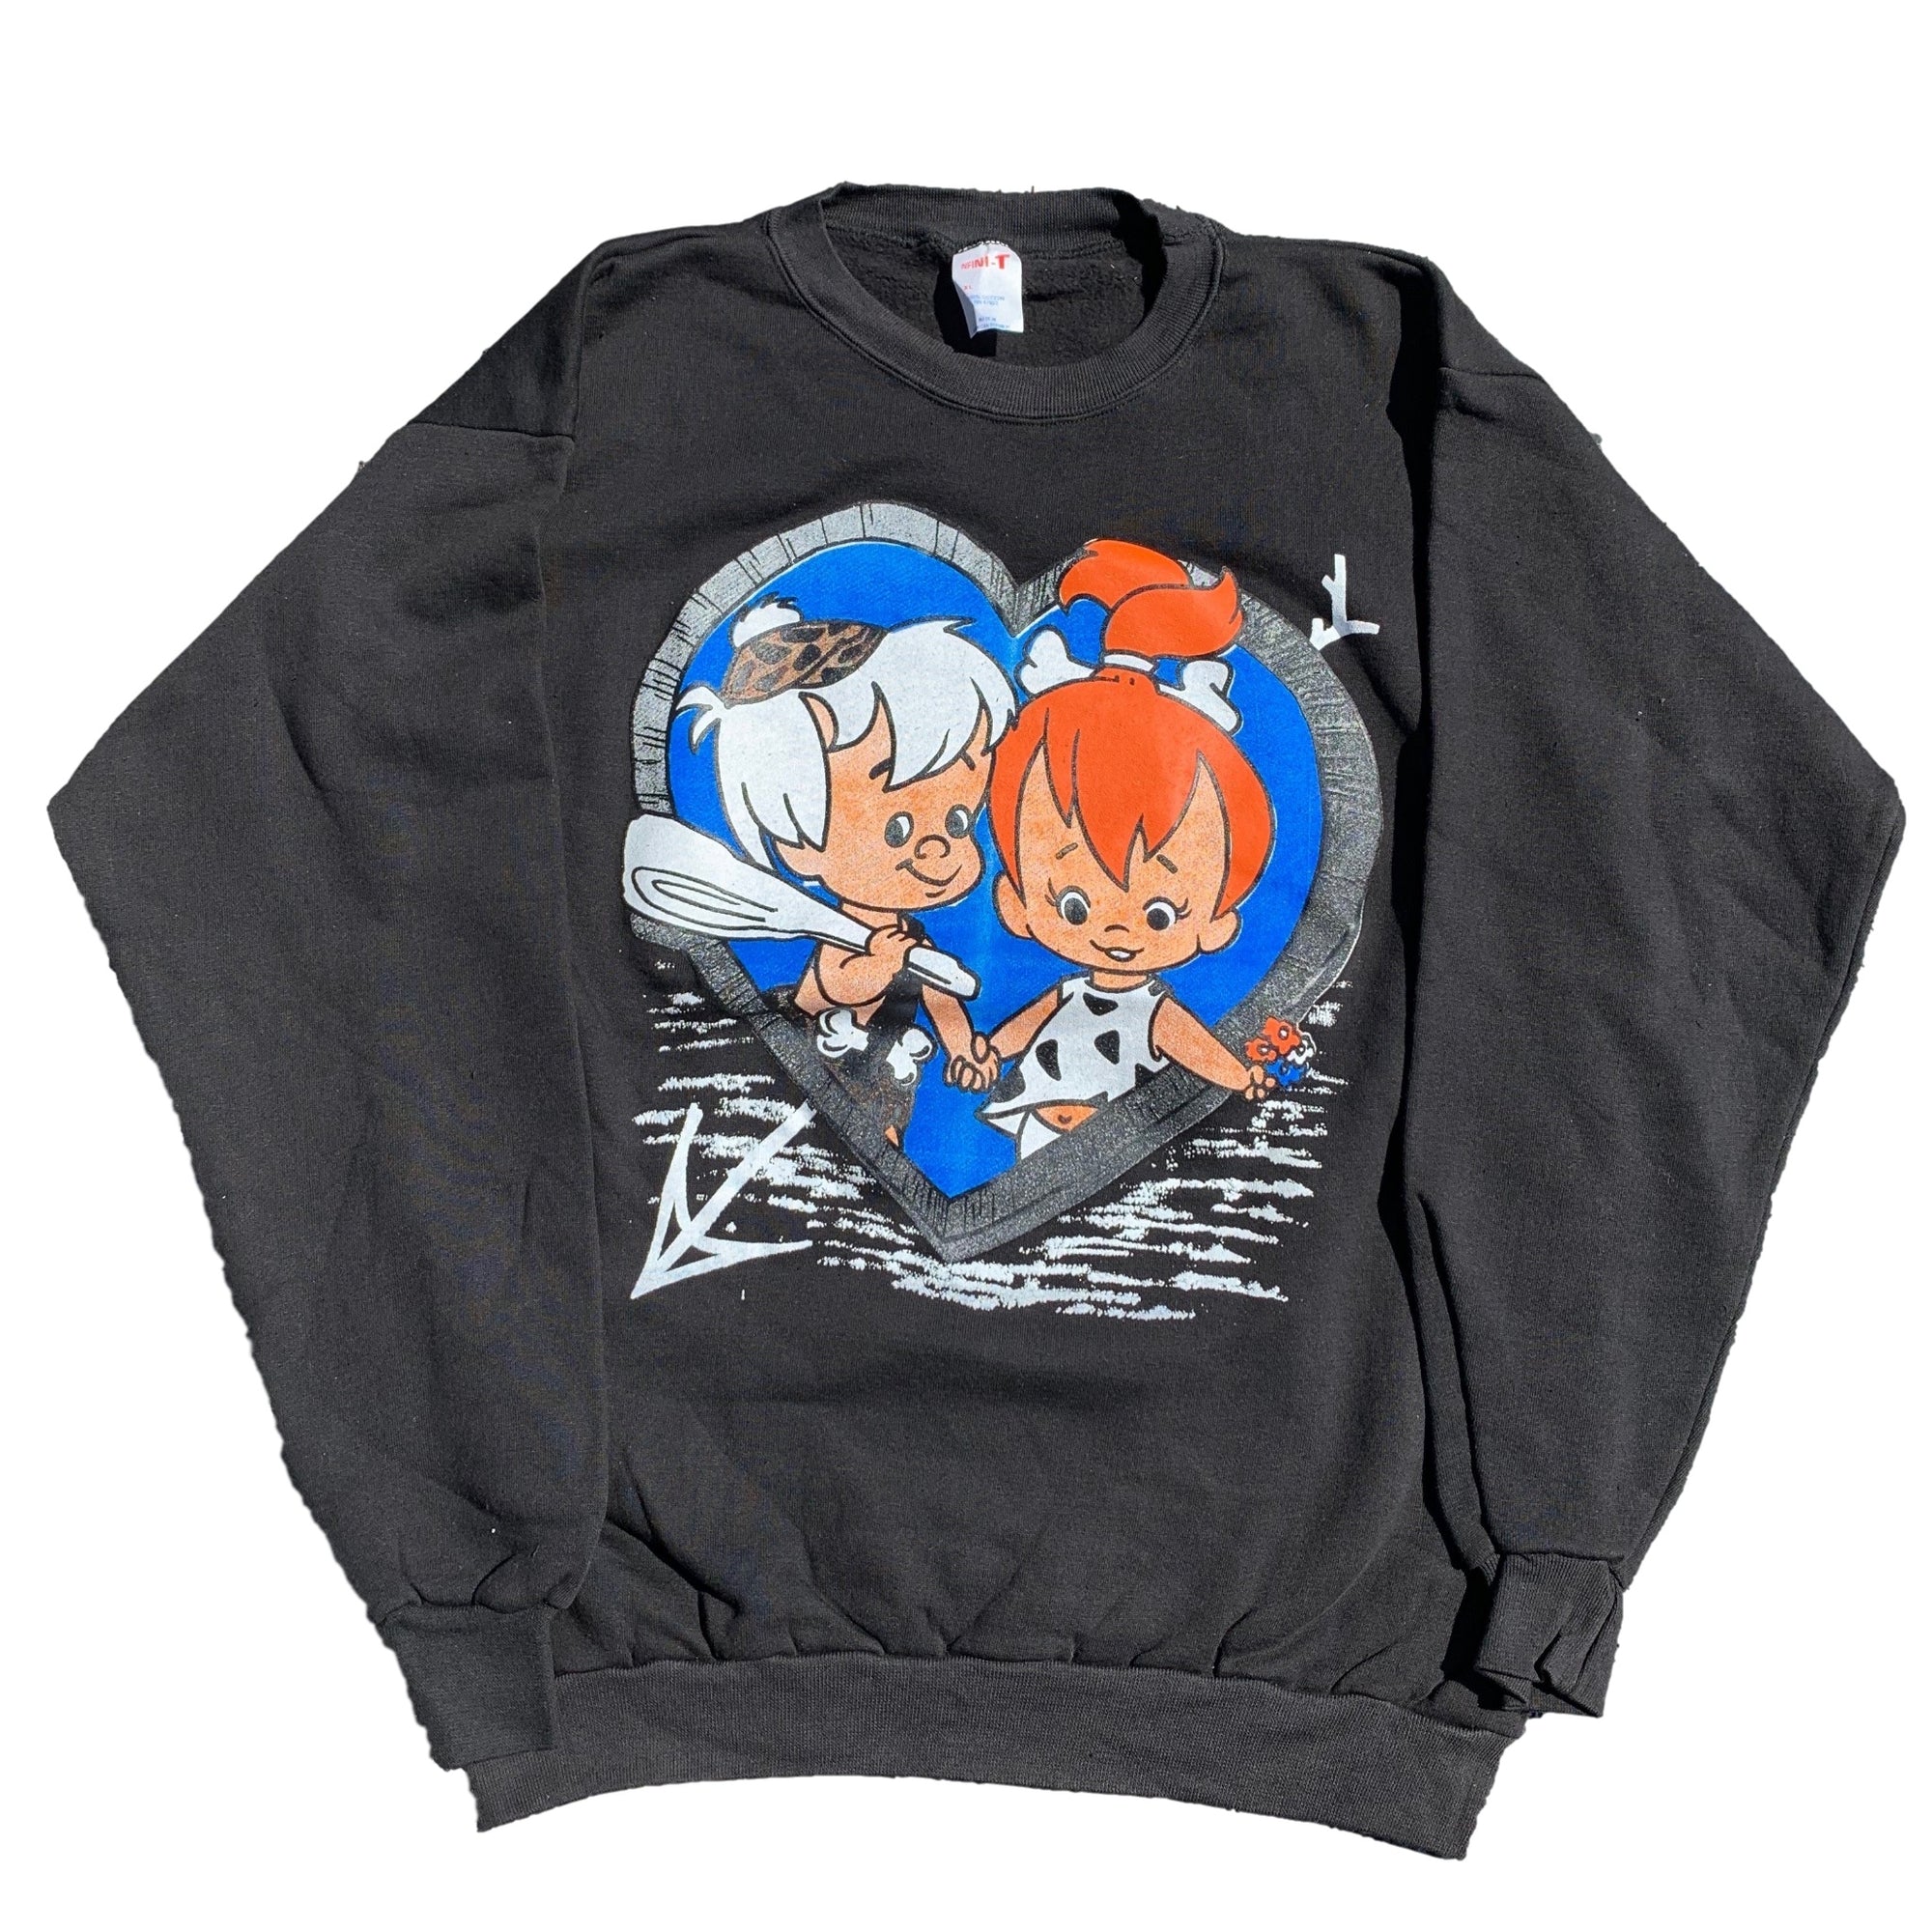 Vintage The Flintstones "Pebbles" Crewneck Sweatshirt - jointcustodydc